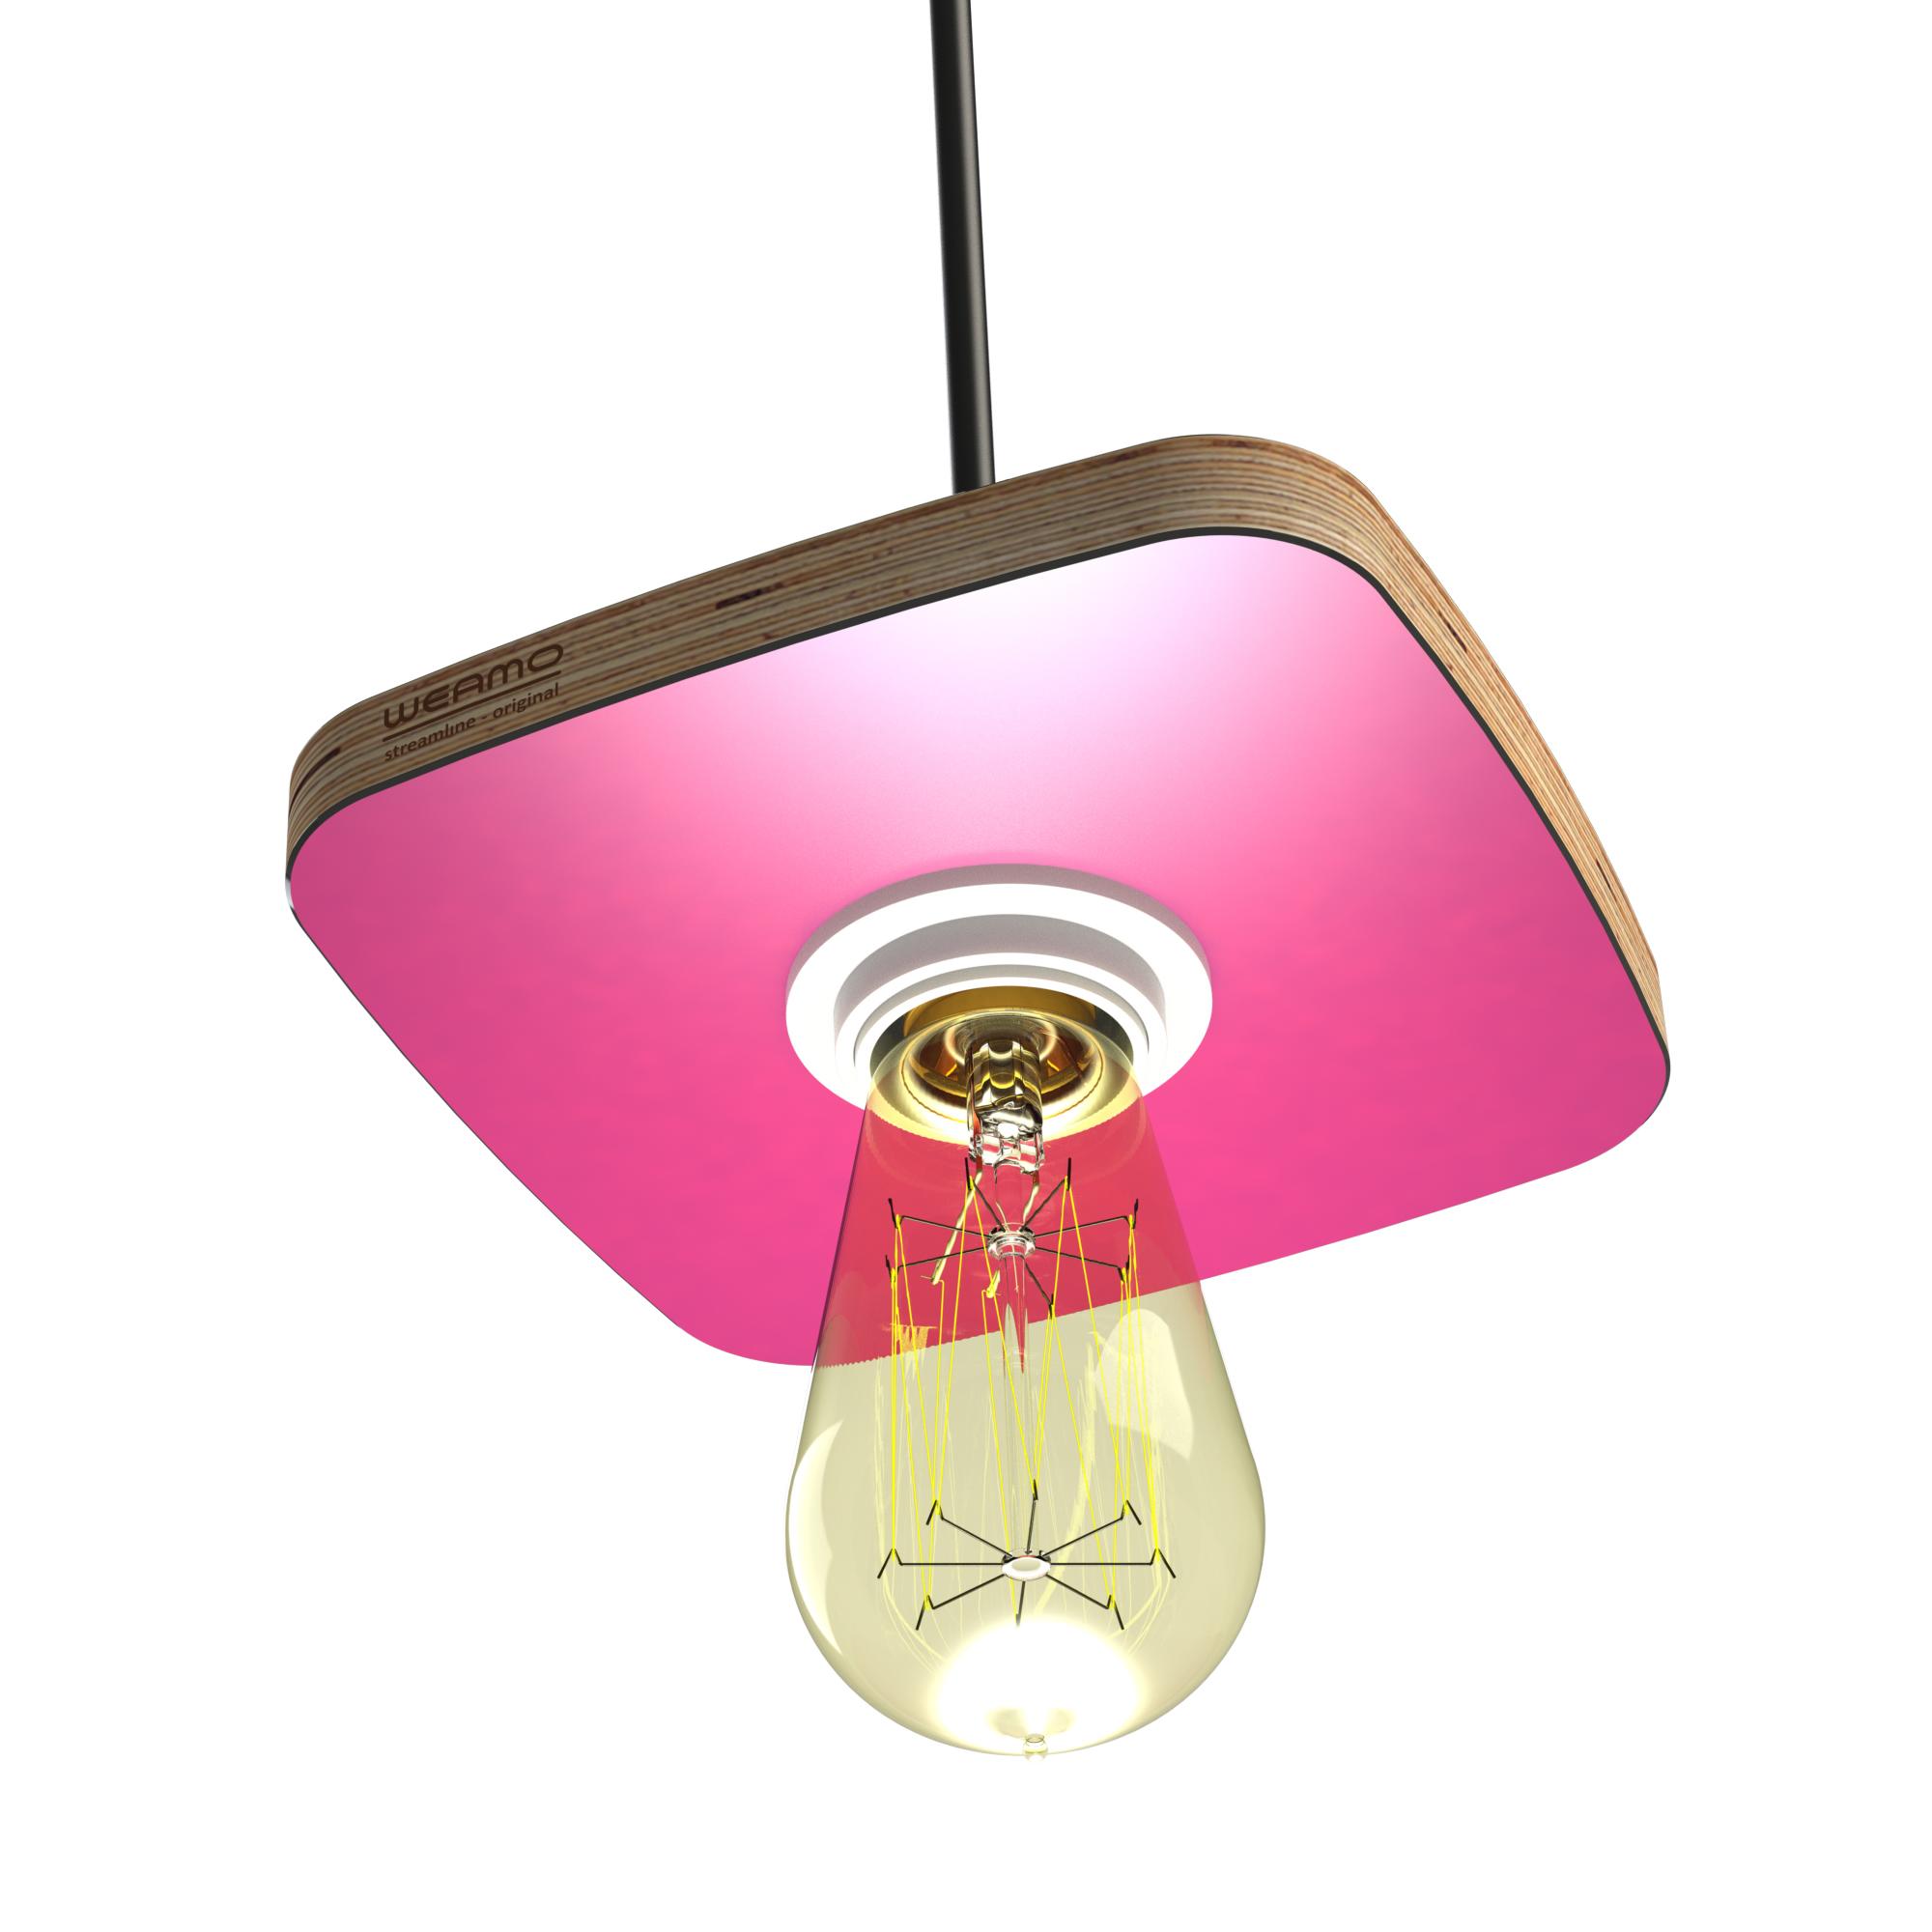 WEAMO Small Lamp Shade - Pretty in Pink